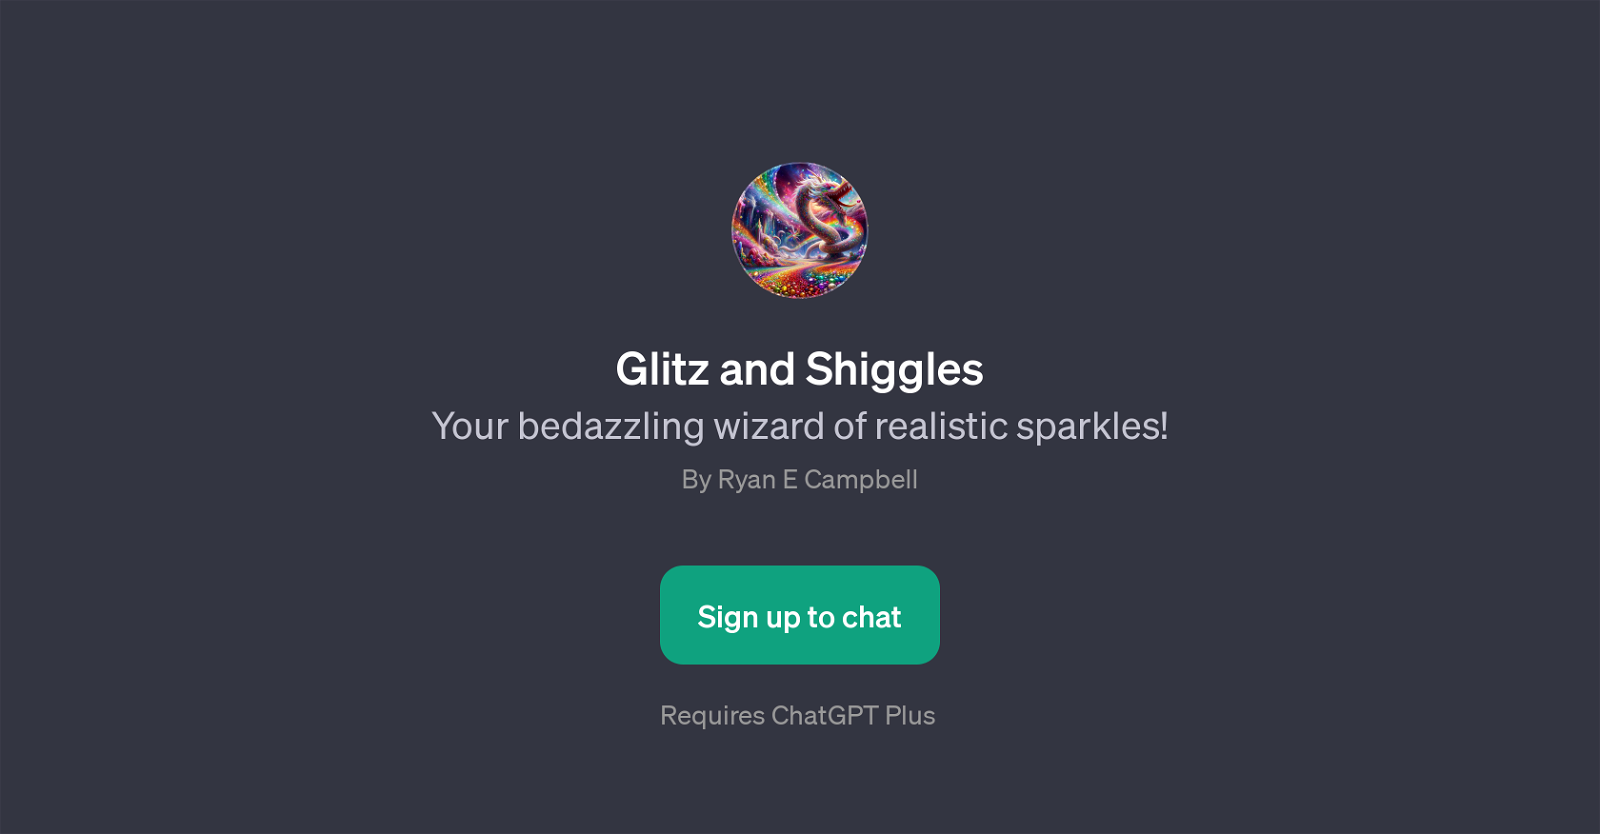 Glitz and Shiggles website